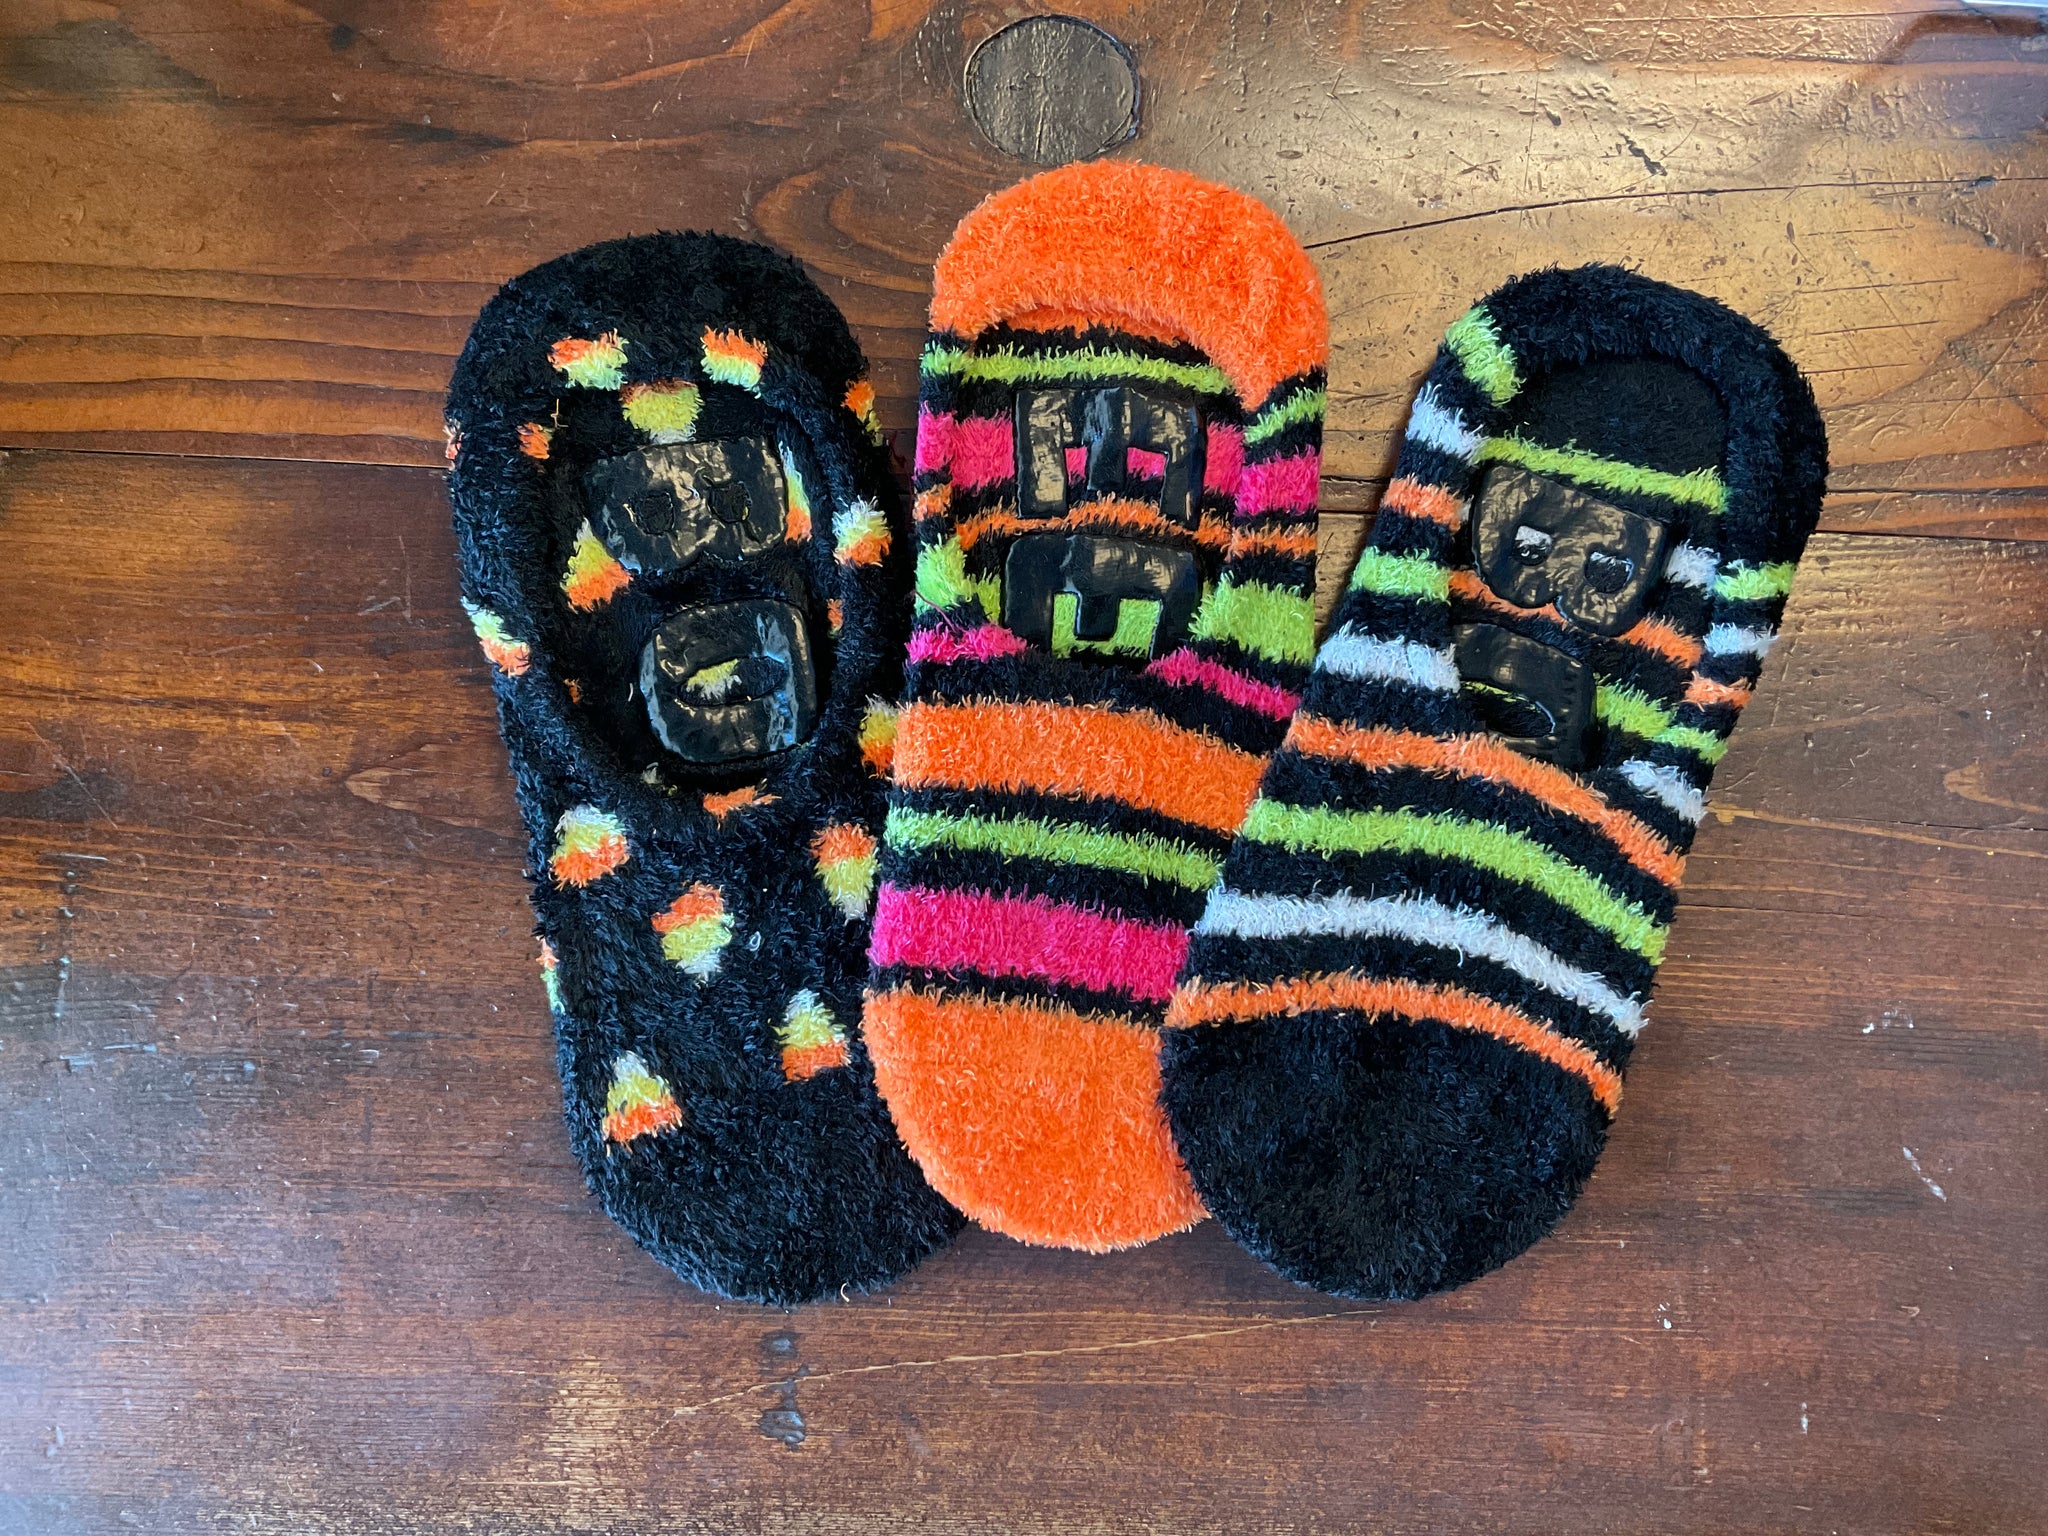 ANEKA Fair Isle Wool Jersey Lined Slipper Socks – AURA QUE